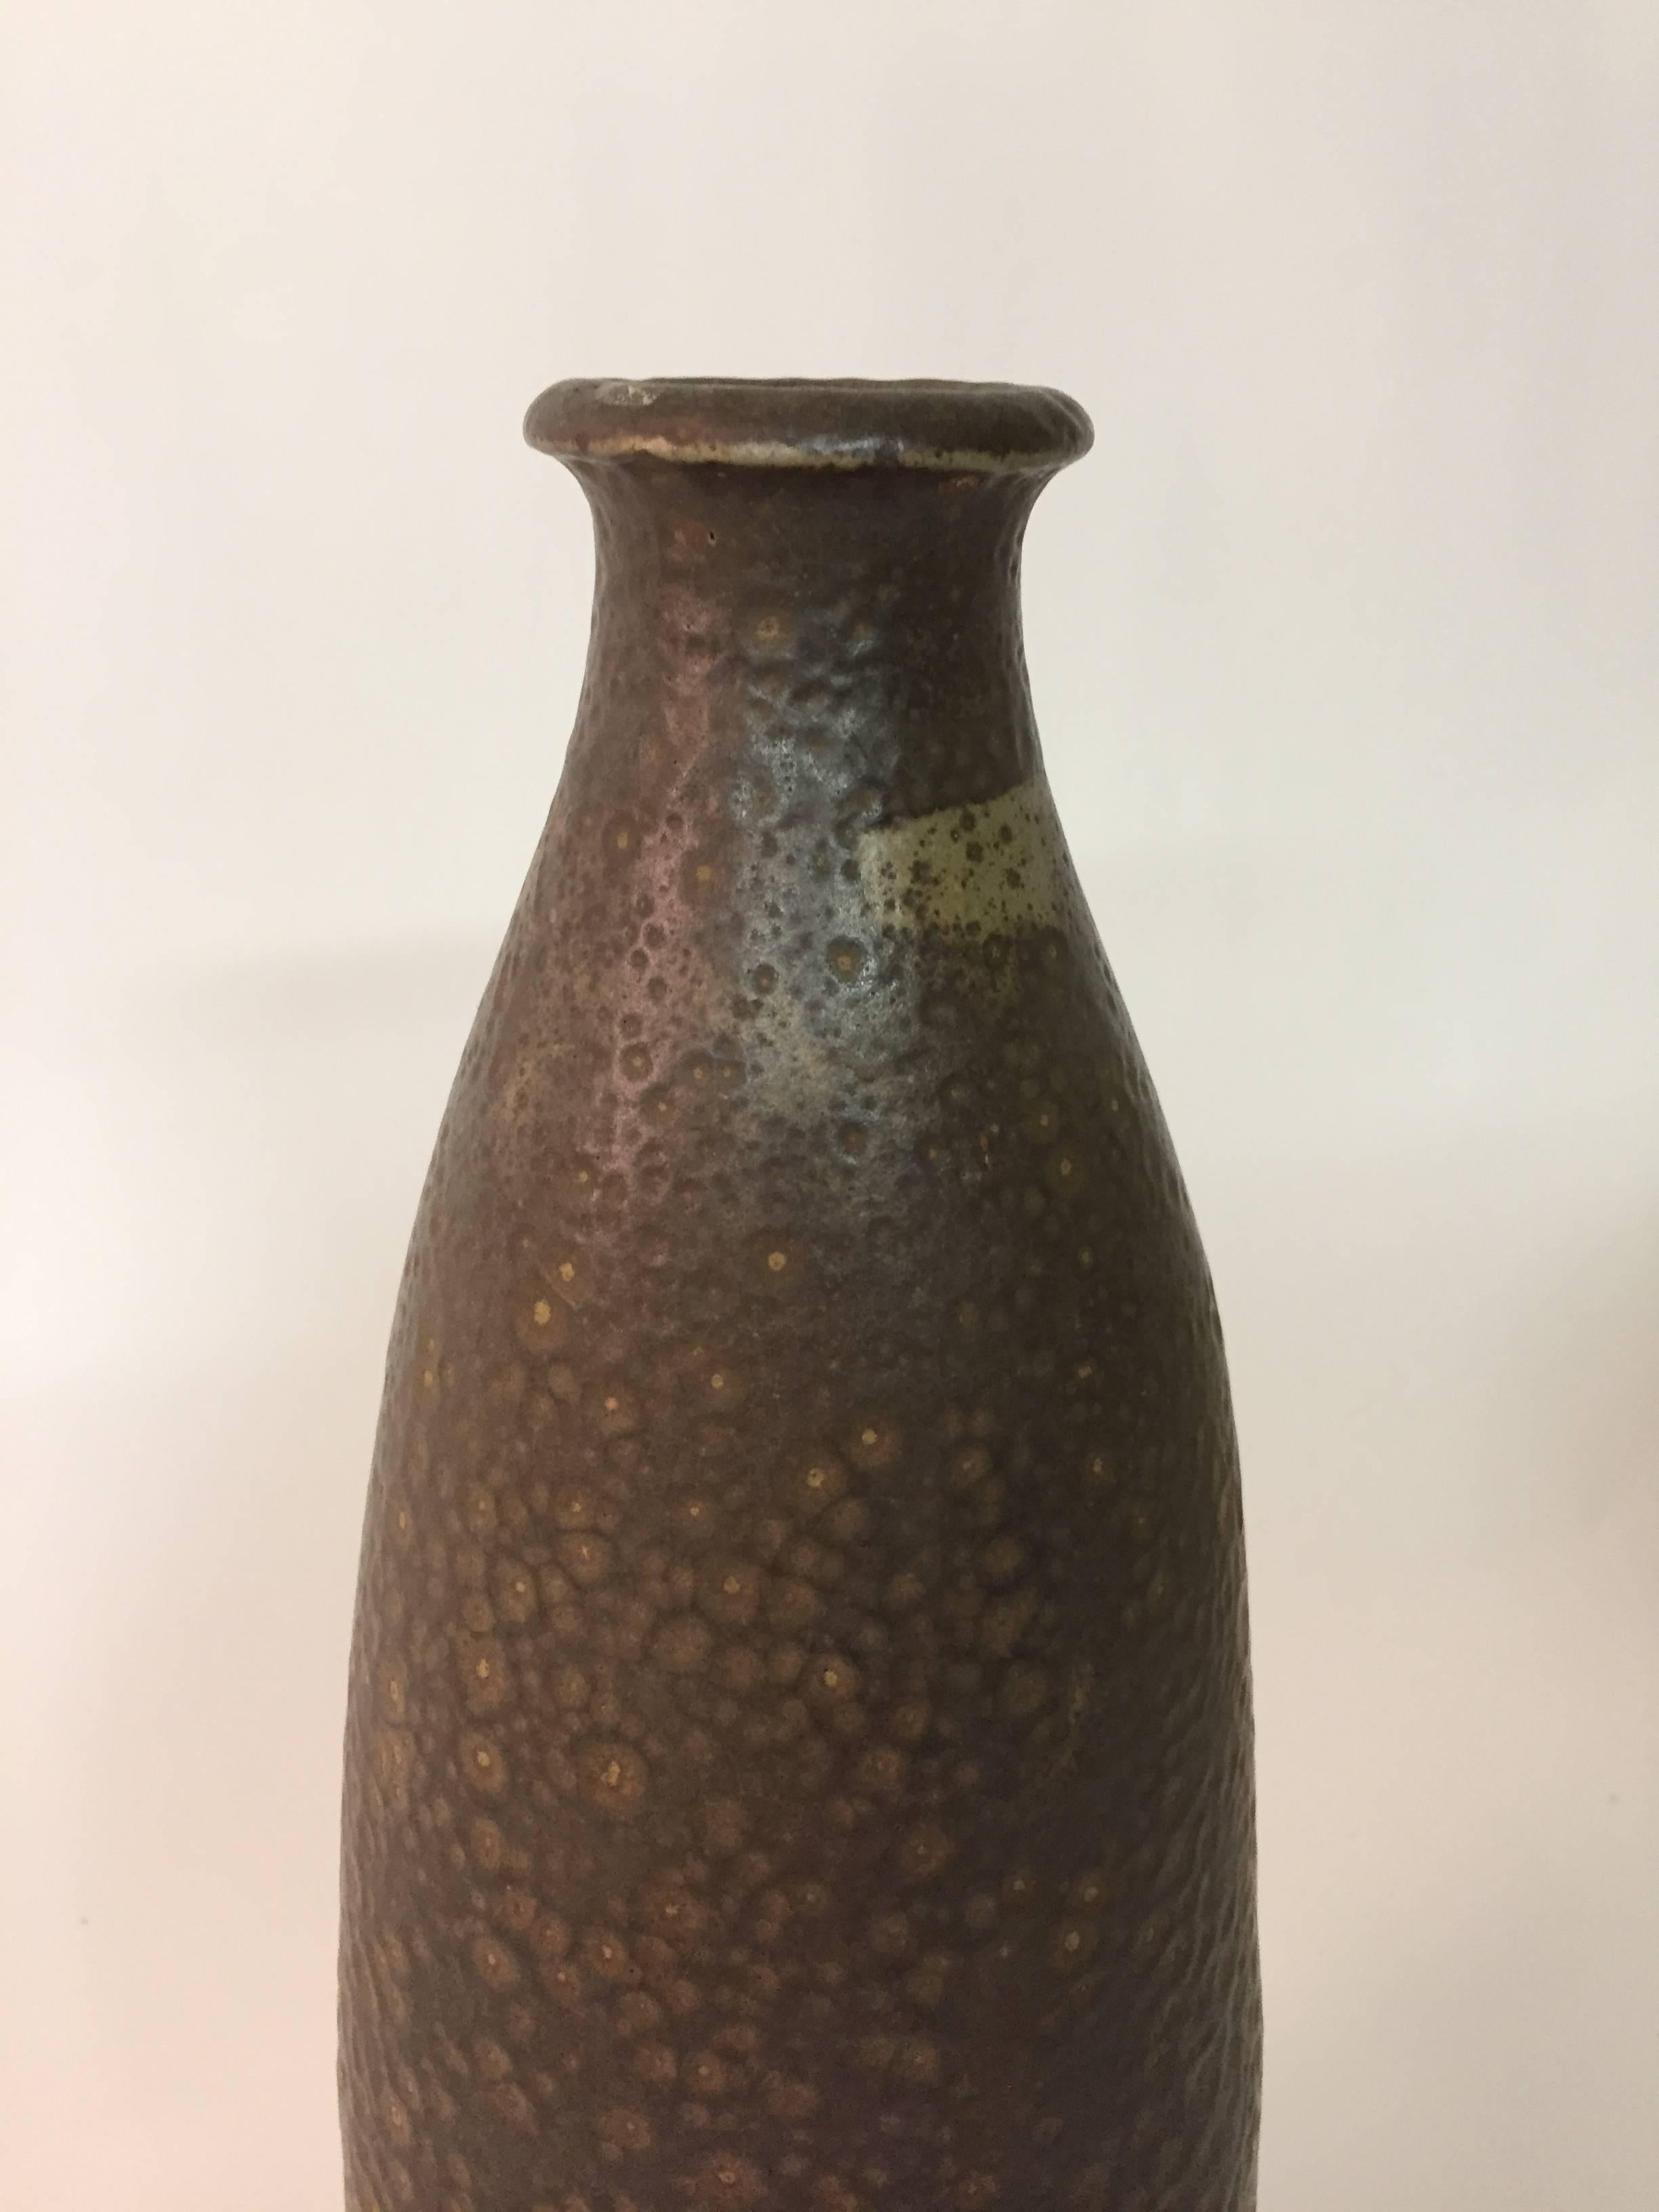 Glazed Marvin Garner 1960s Modernist Studio Pottery Vase